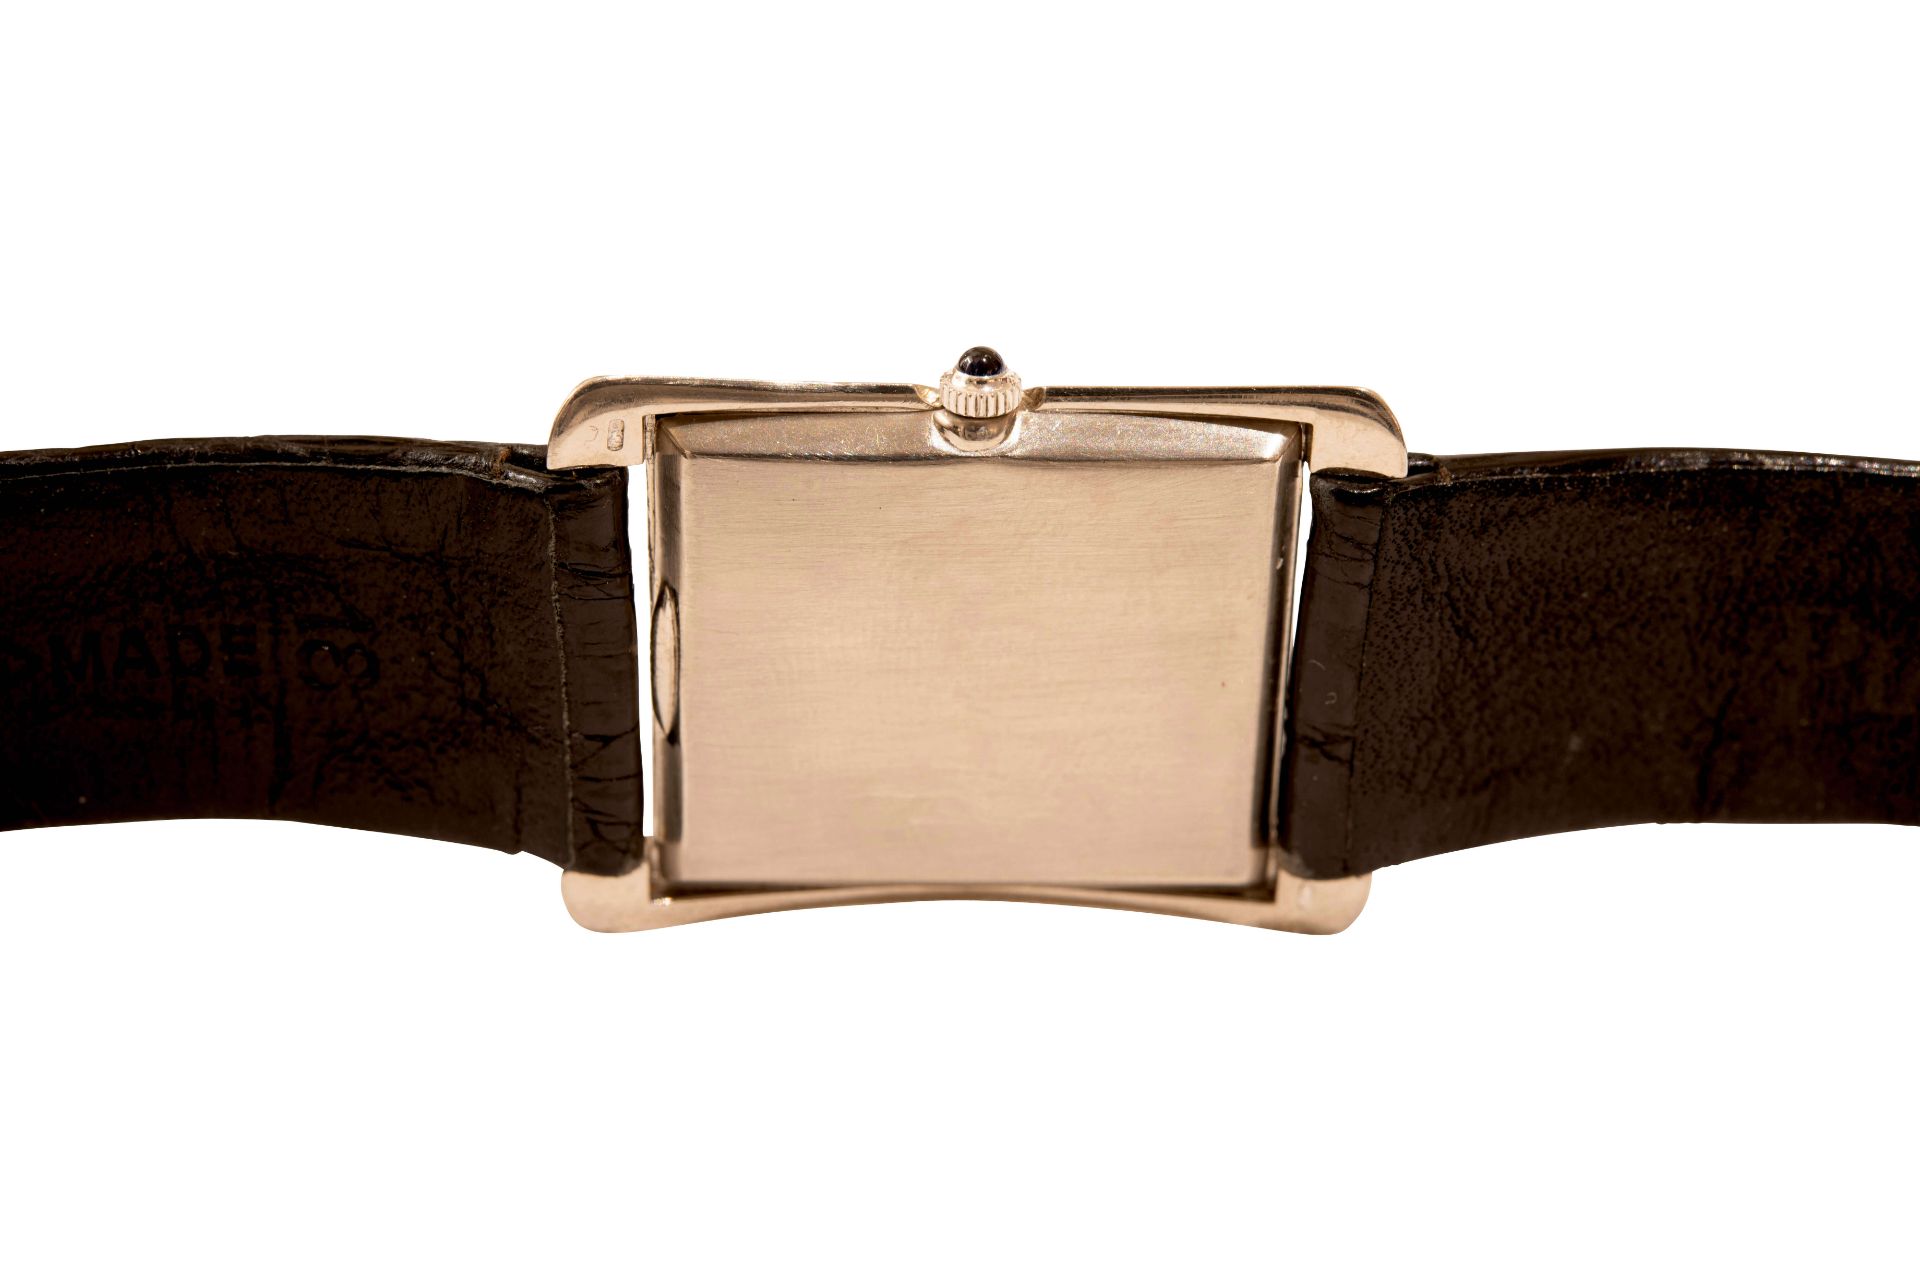 PIAGET SWISS Armbanduhr|PIAGET SWISS Wristwatch - Image 4 of 5